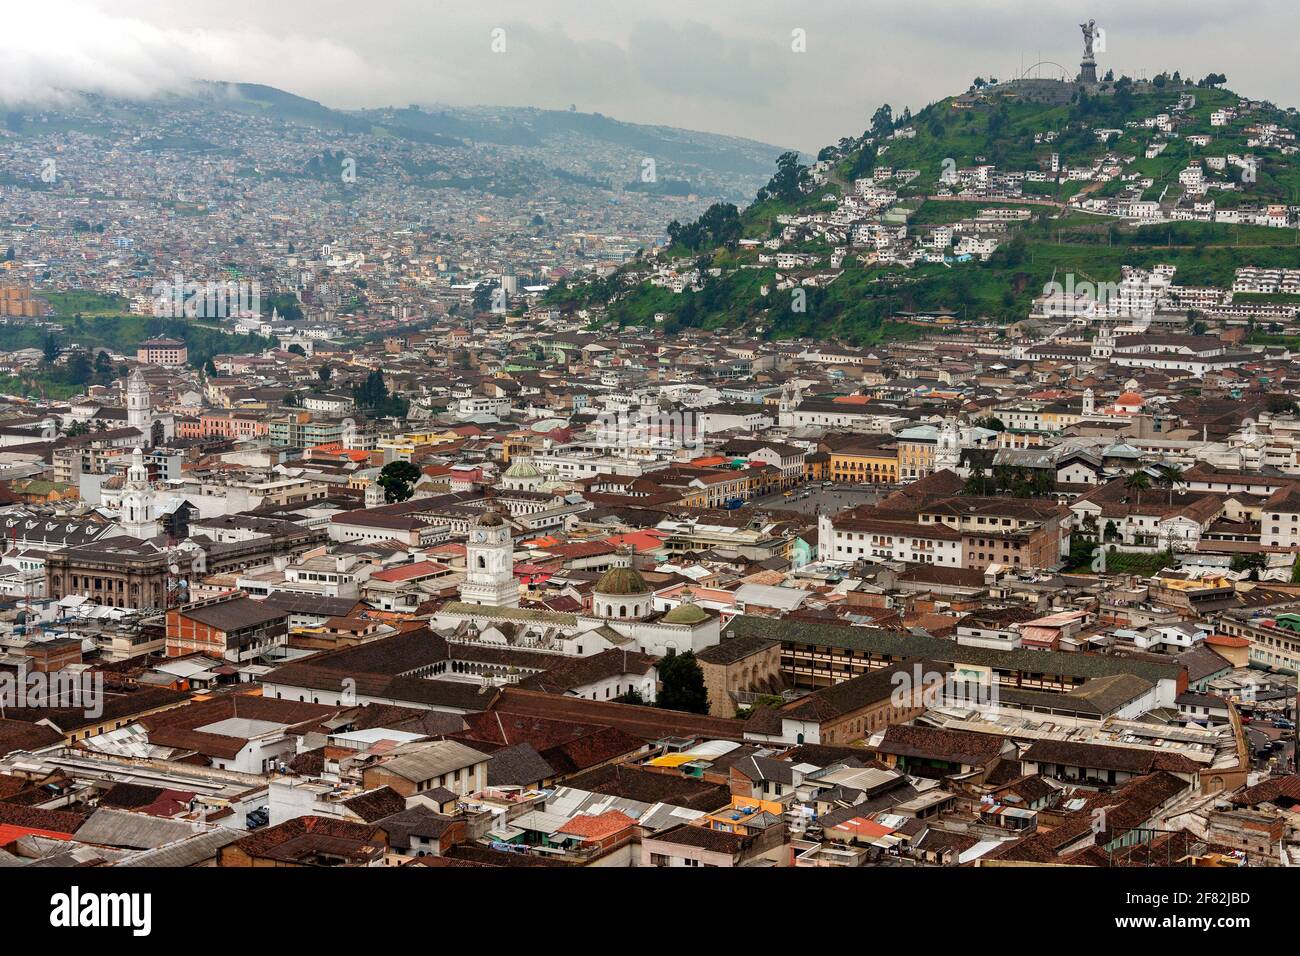 The city of Quito in Ecuador, South America. Stock Photo